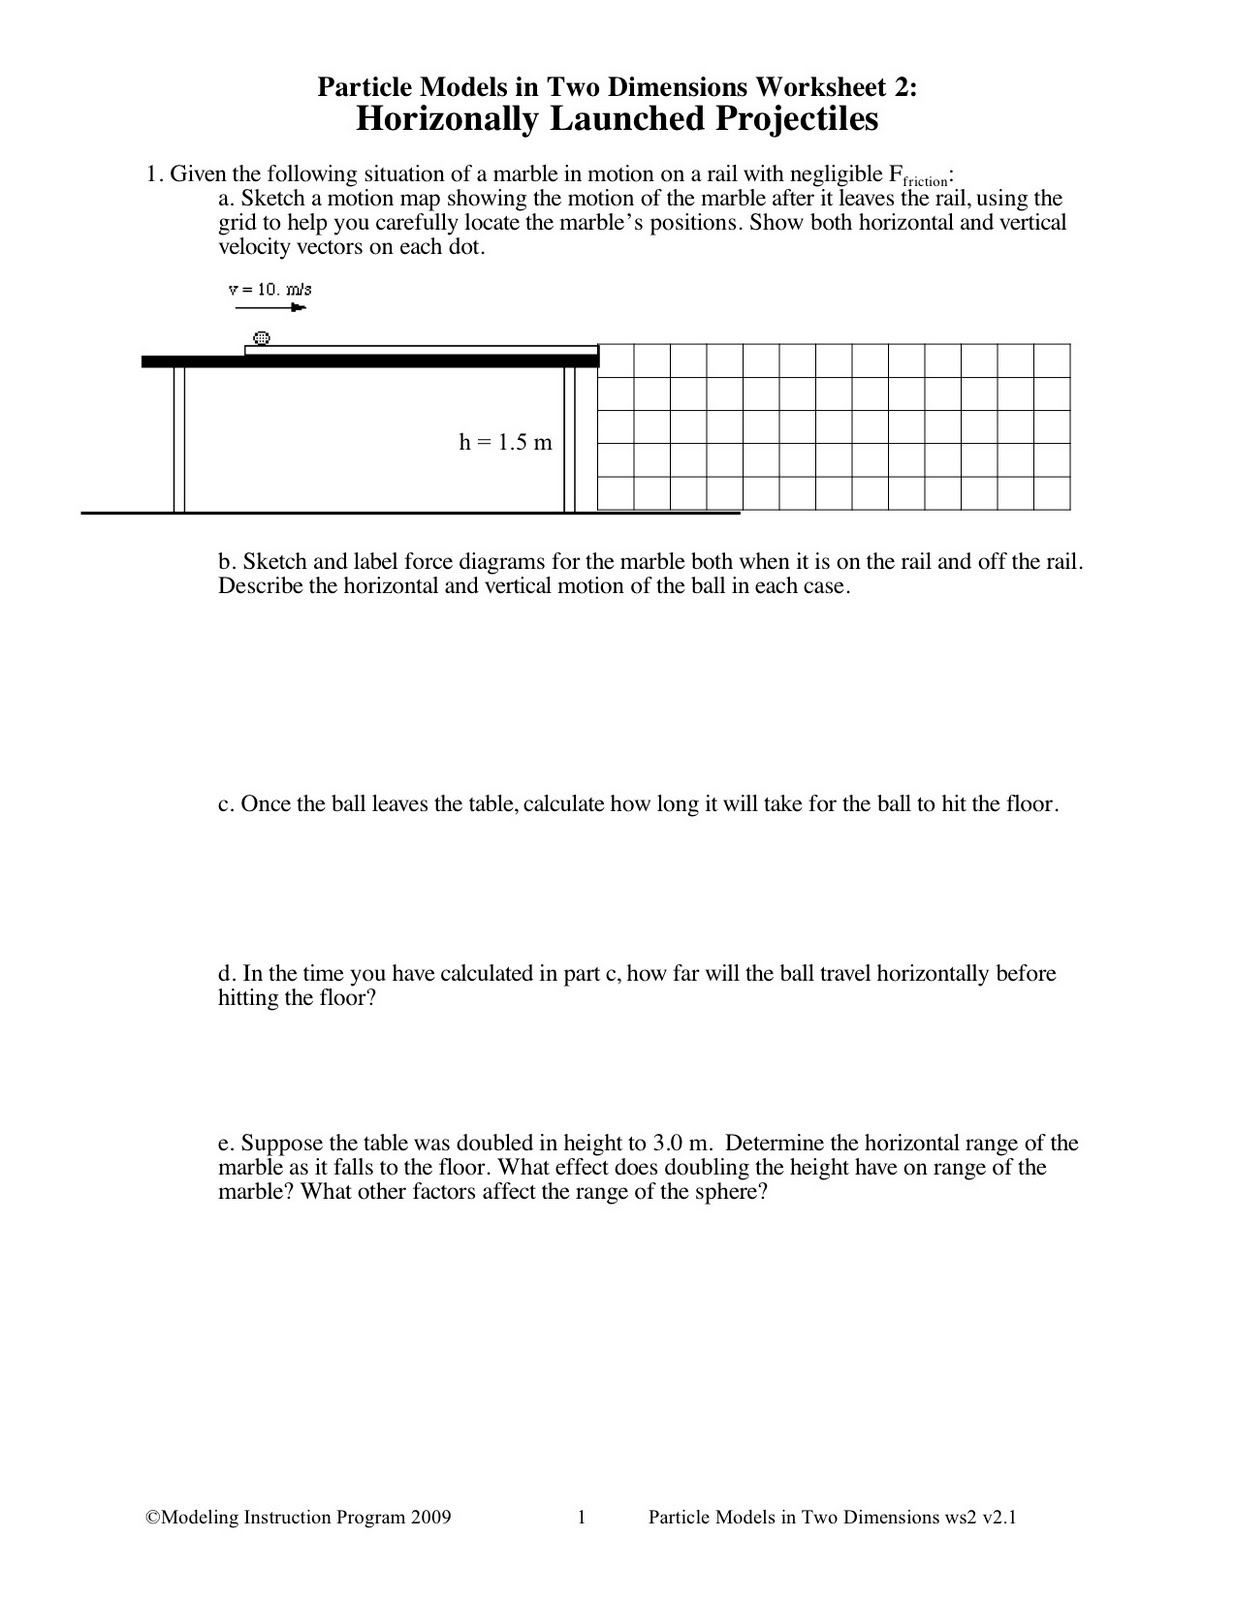 Friction and Gravity Worksheet Answer Key Image